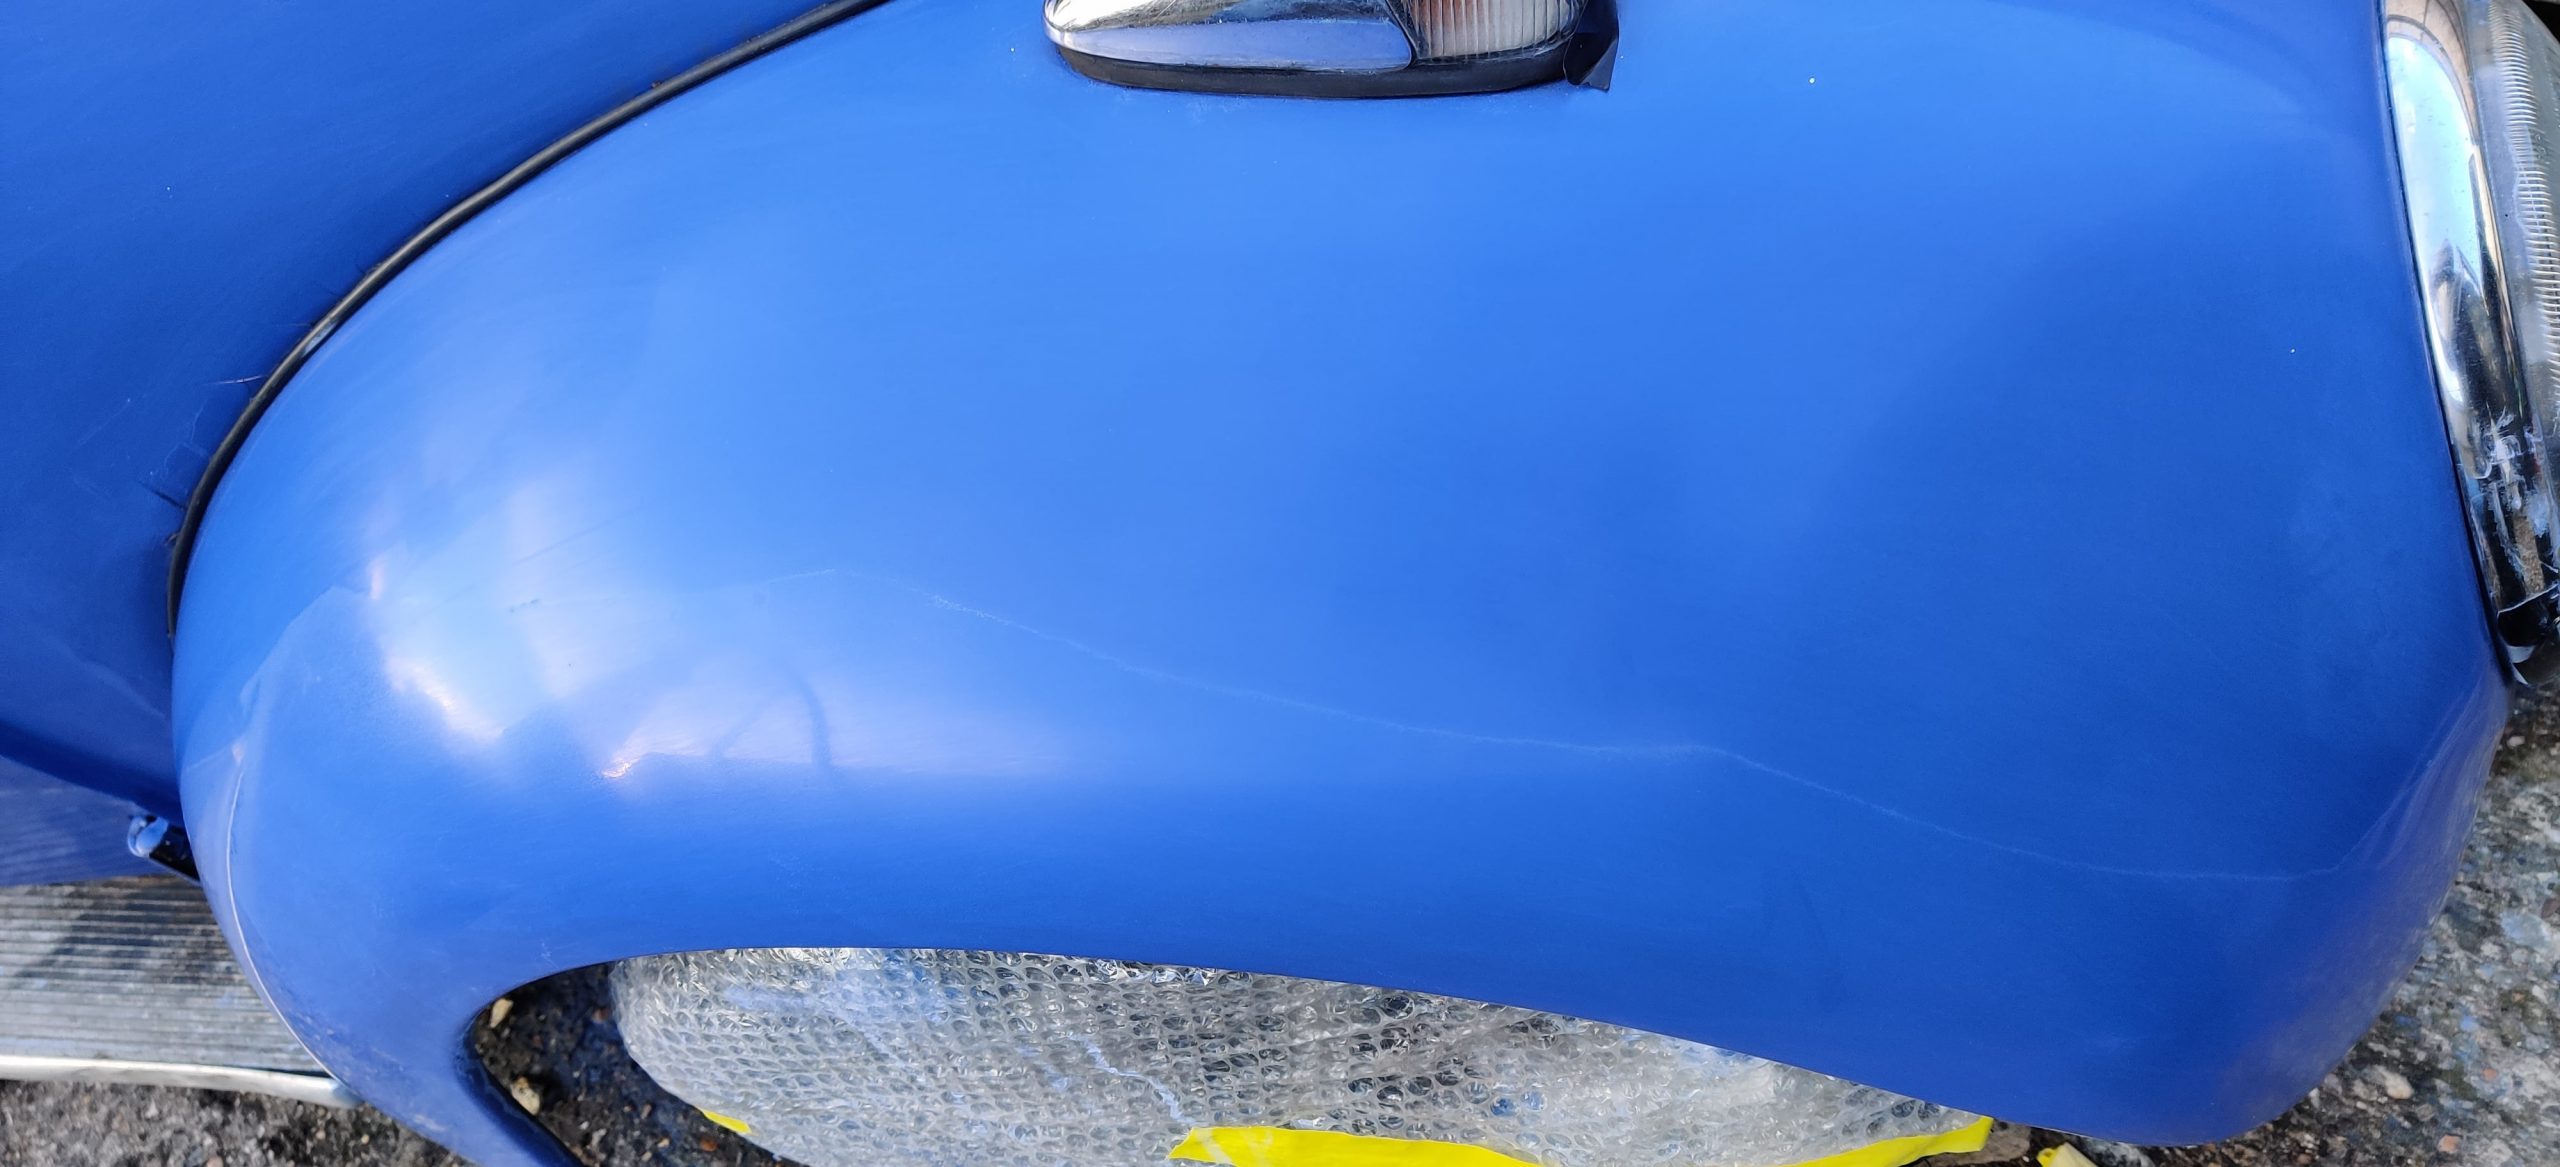 VW Beetle Headlights Paint